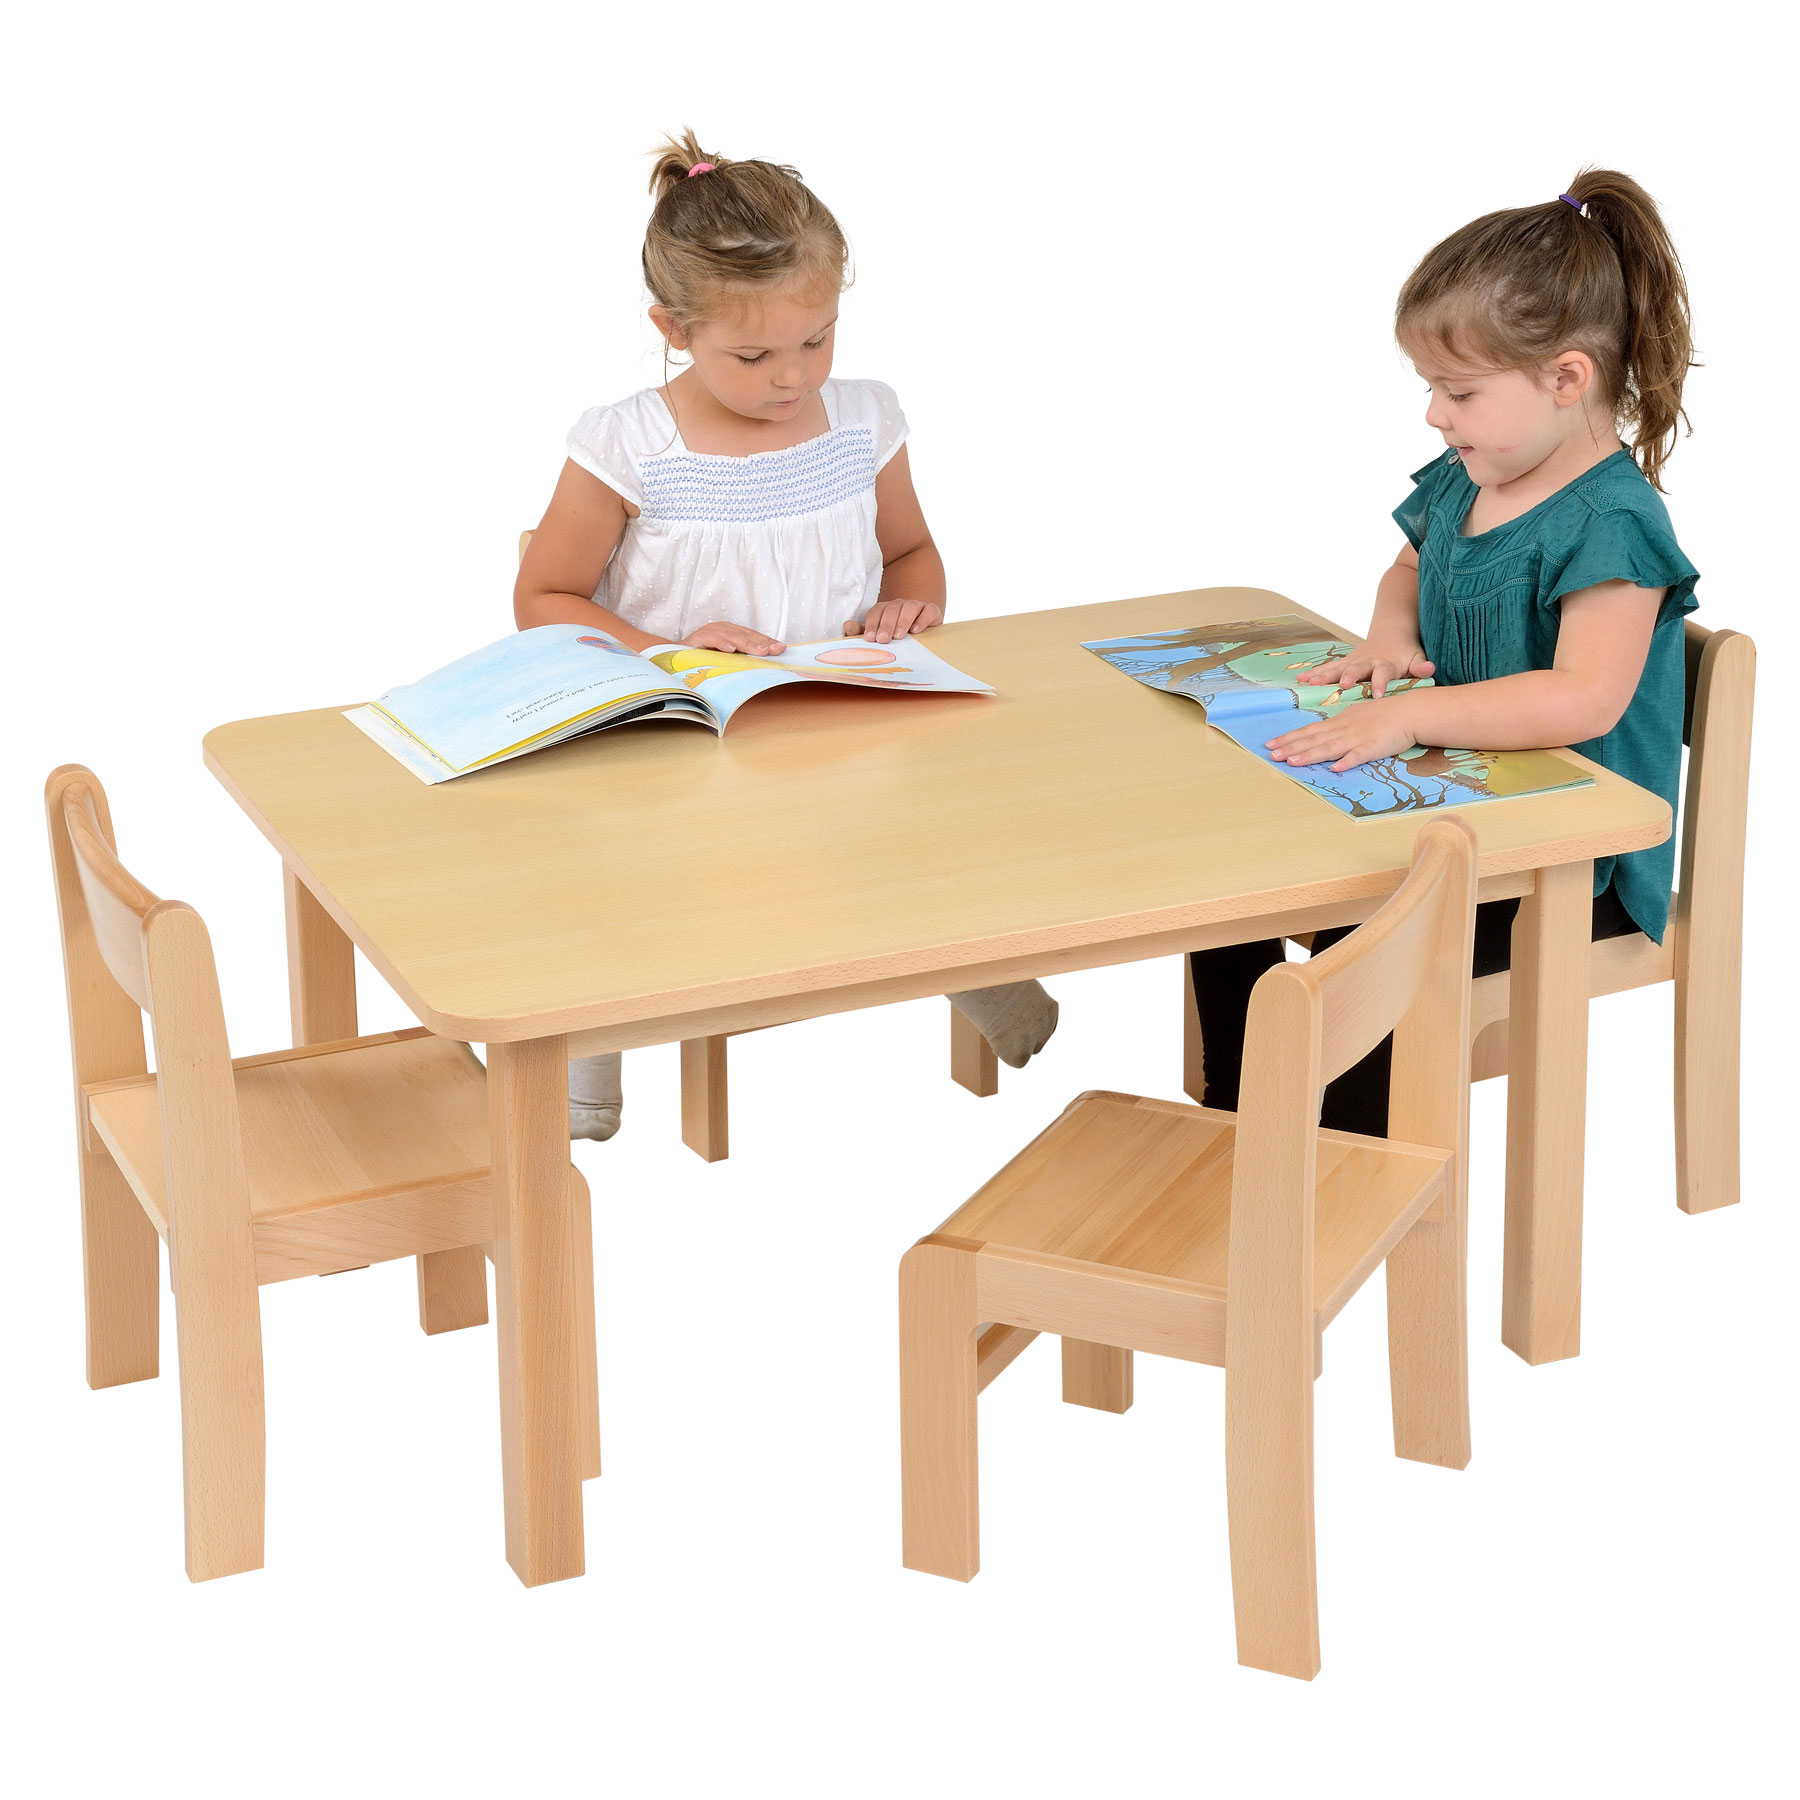 Children's Wooden Tables